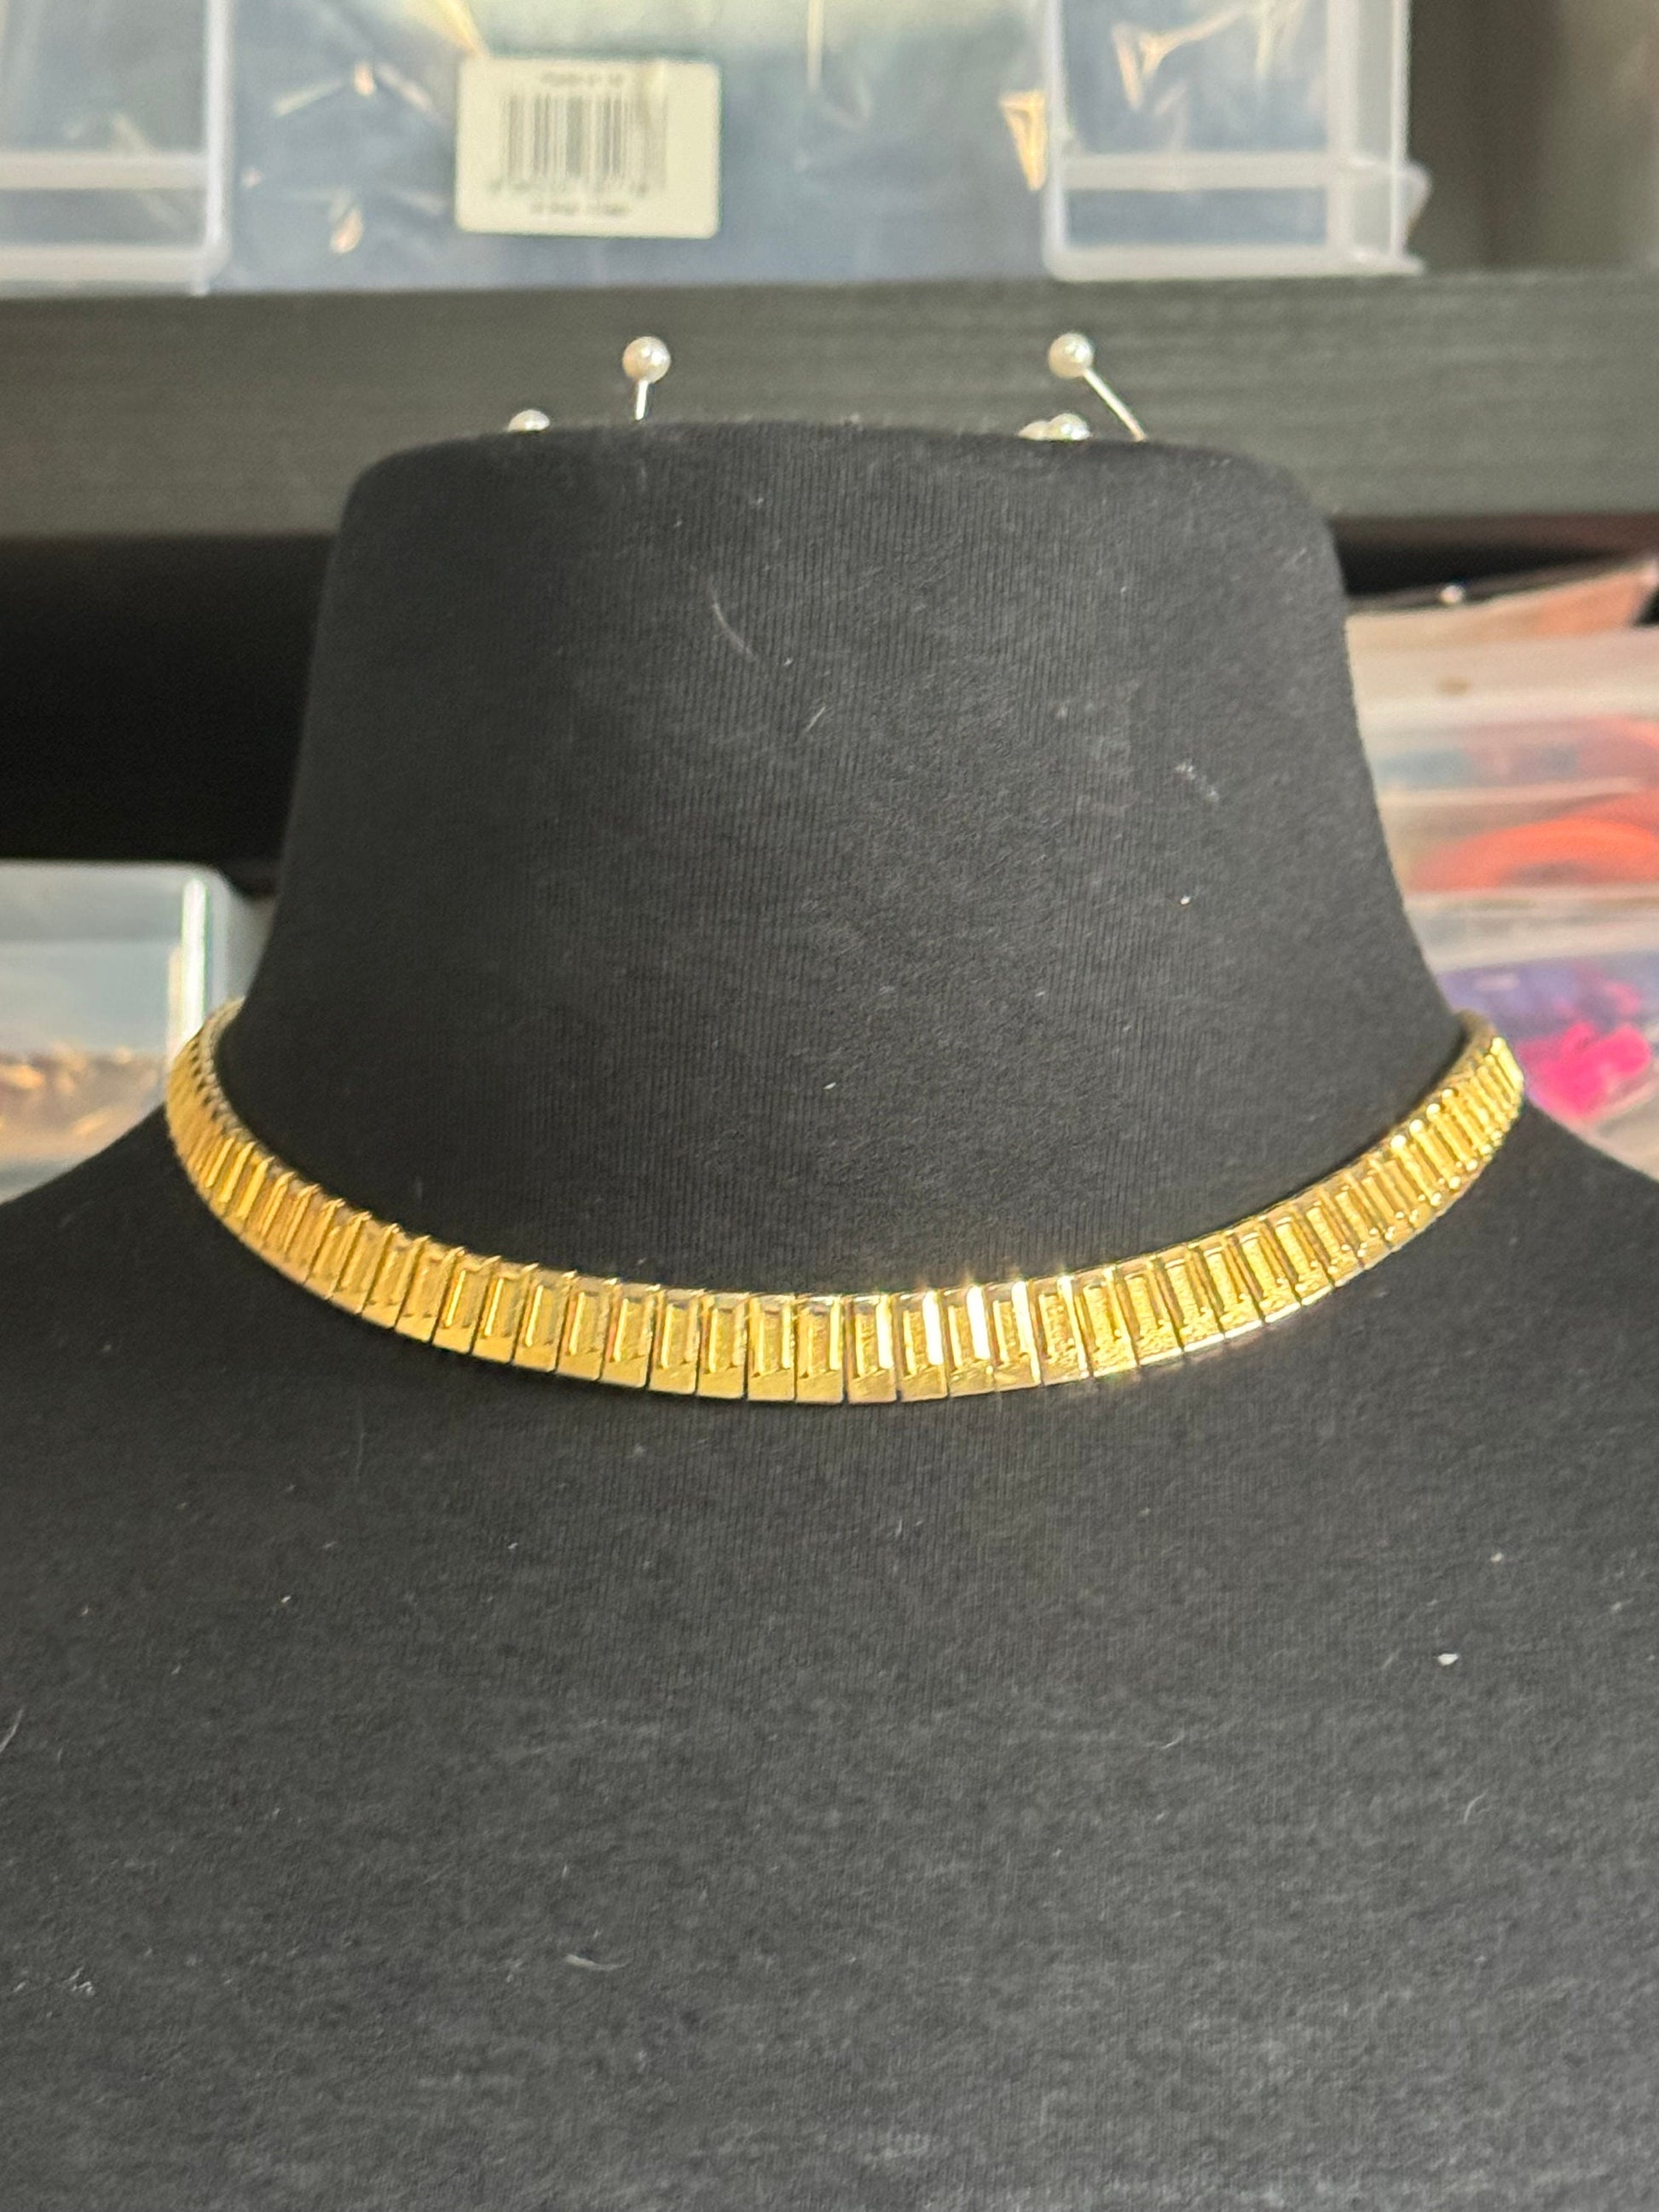 Vintage Egyptian Revival Cleopatra gold Played Necklace fringe Link Runway Statement Choker